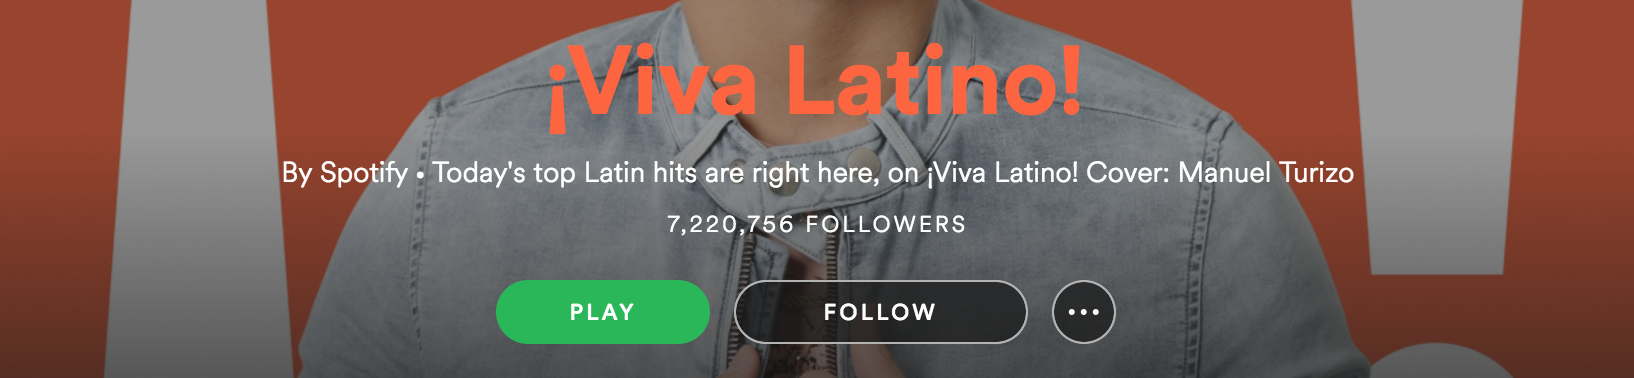 Viva Latino: Spotify’s Flagship Playlist for the Latin Market